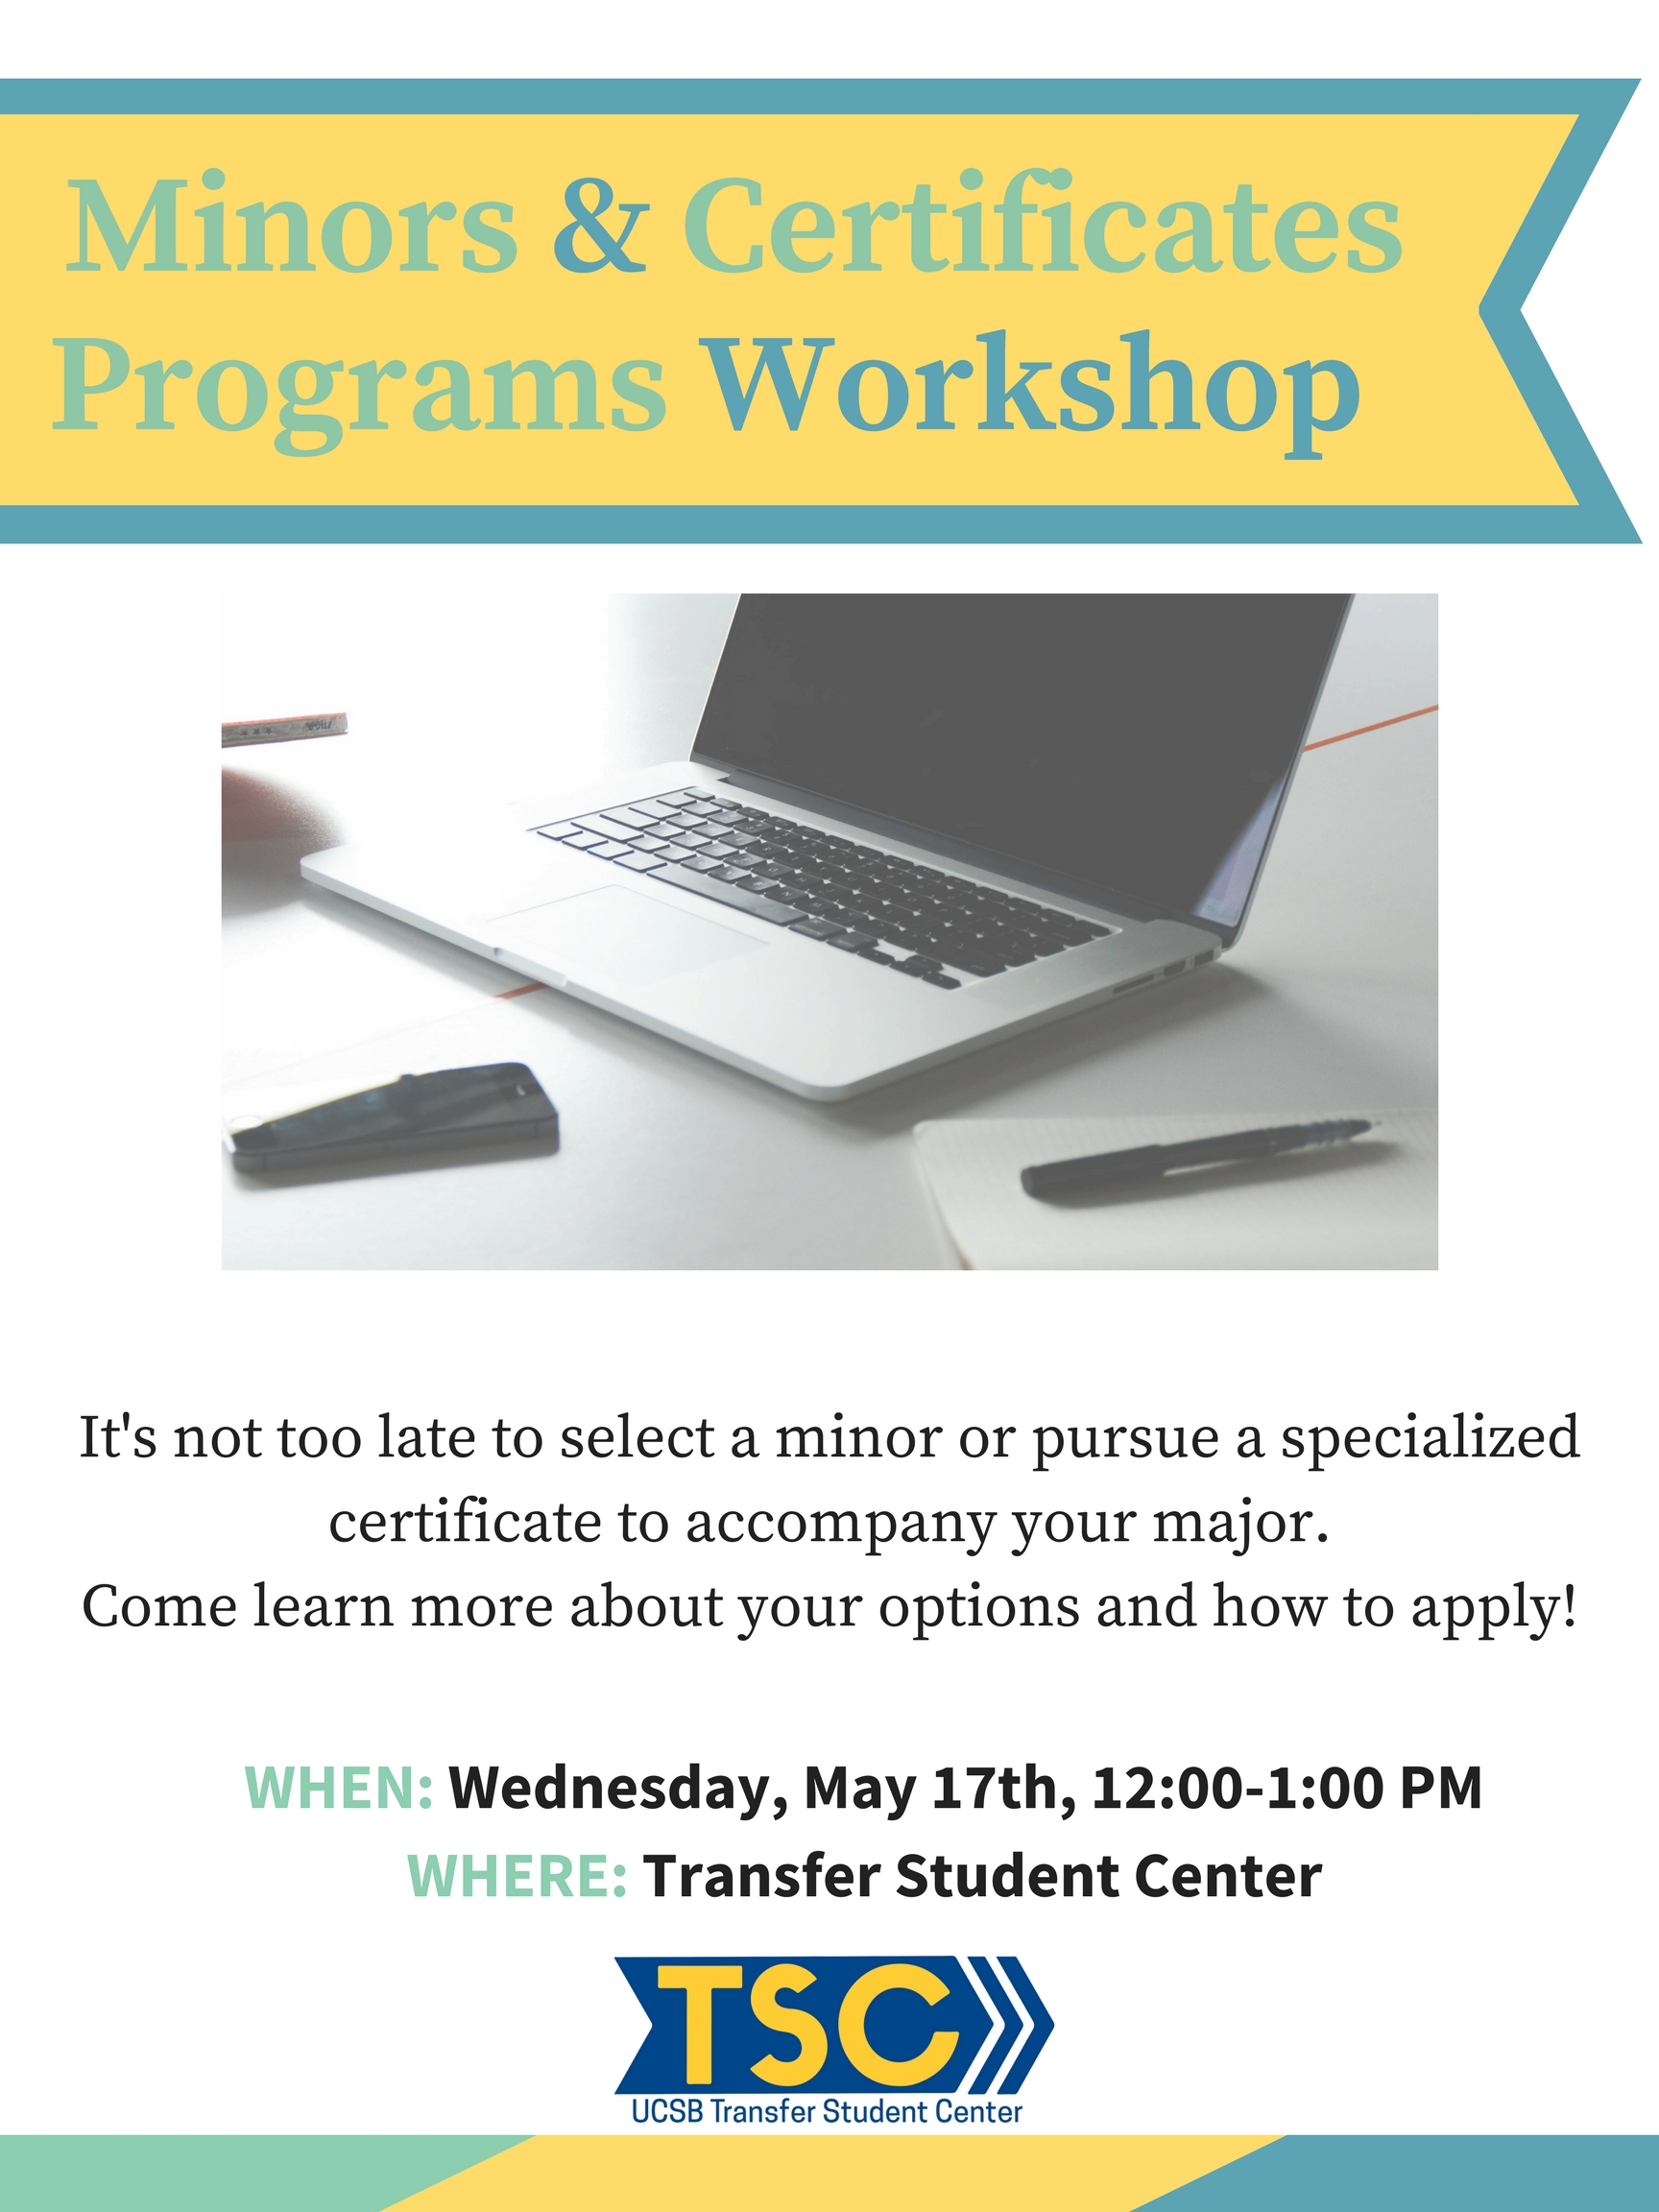 Minors & Certificates Programs Workshop